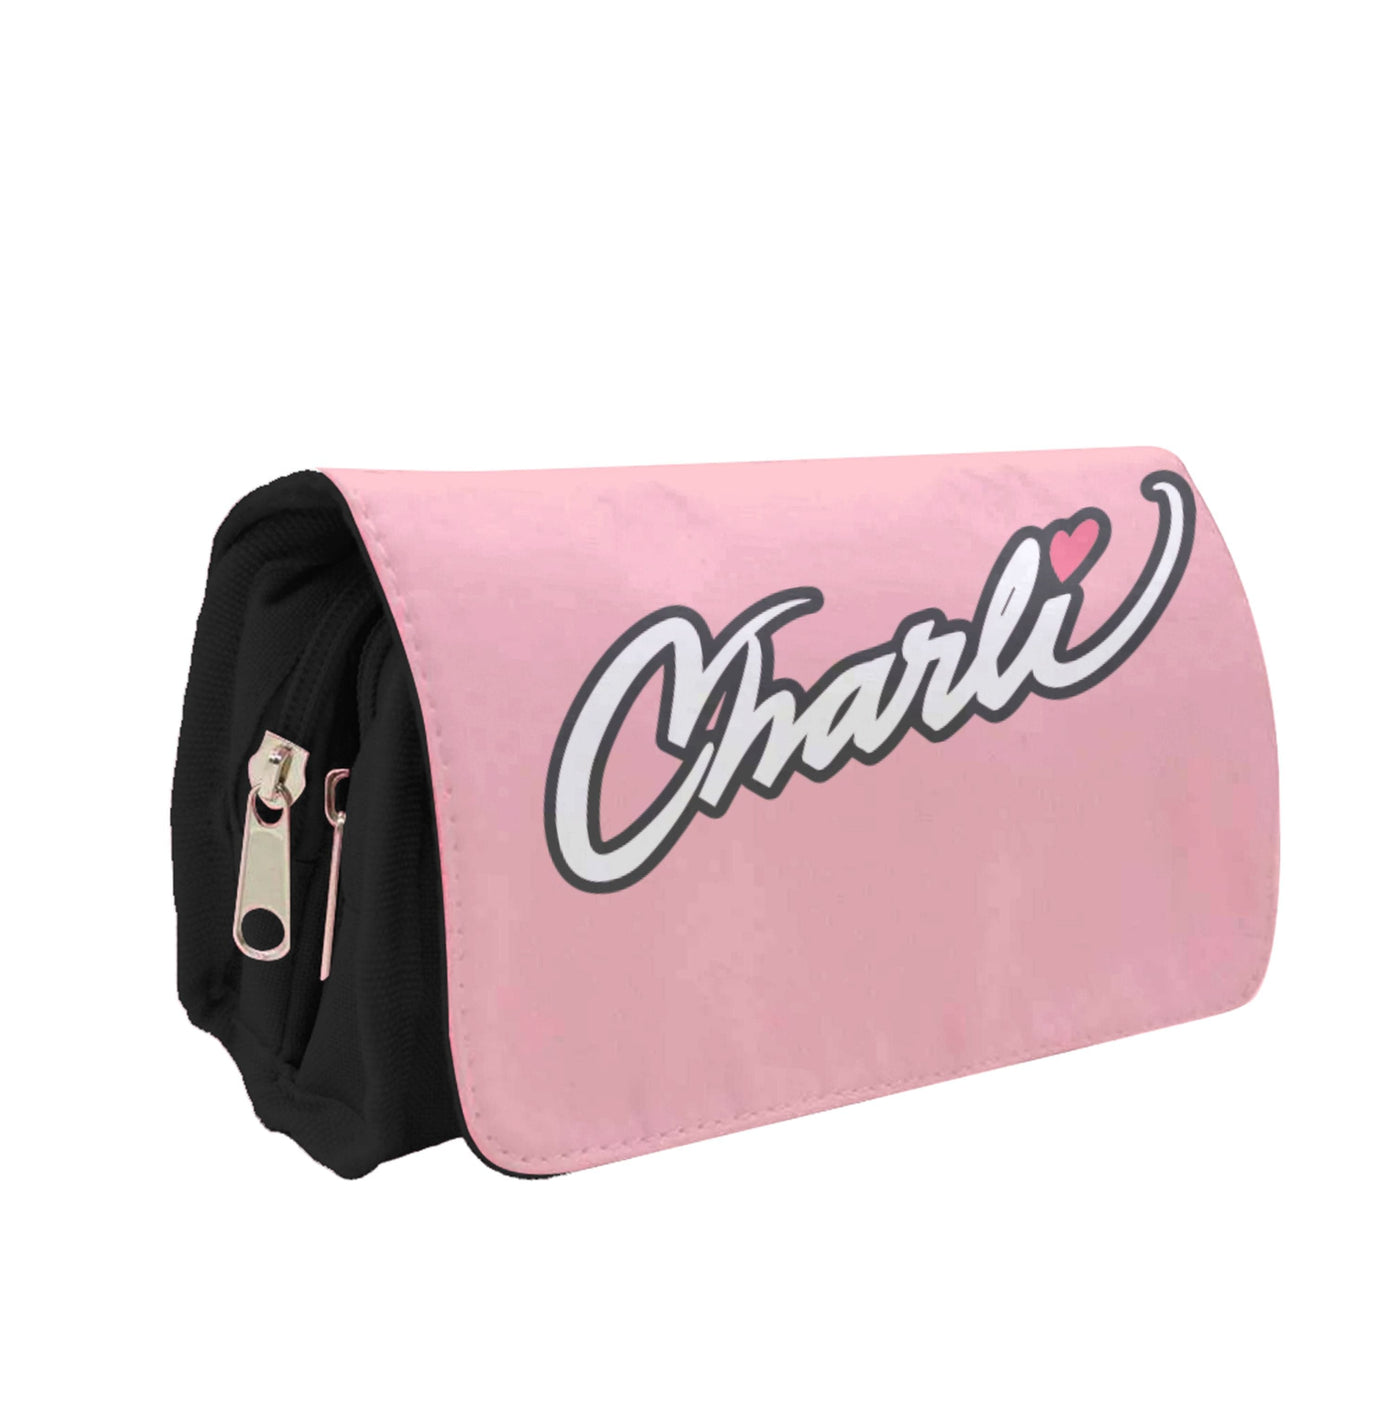 Charli Heart - Charlie D'Amelio Pencil Case